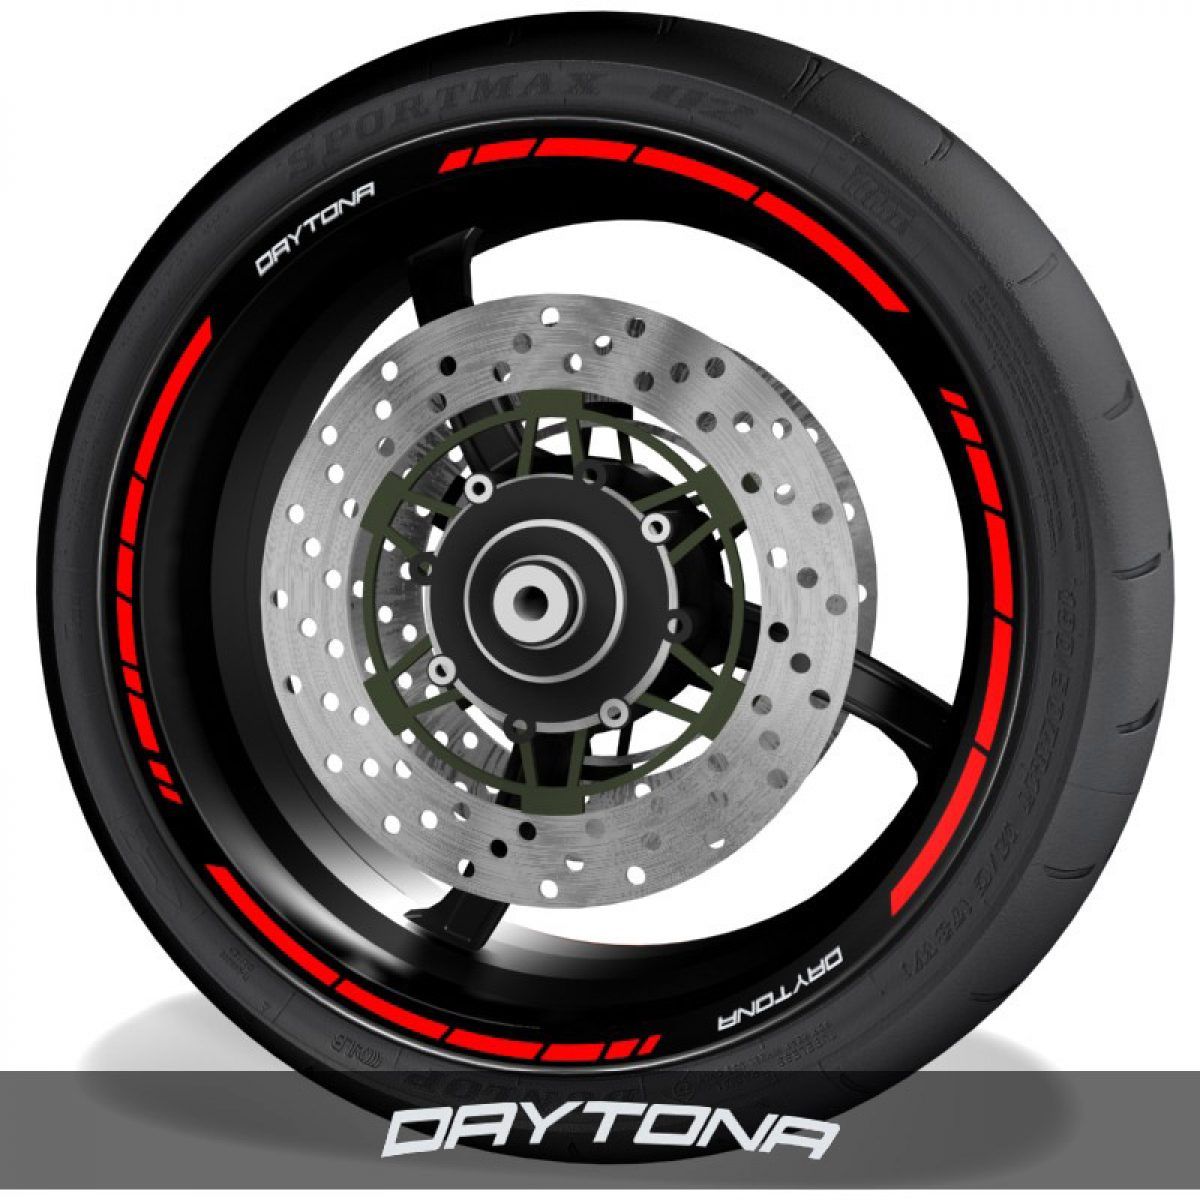 Triumph Daytona Motorcycle Rim Wheel Decal Accessory Sticker SDPKPWPTR002 